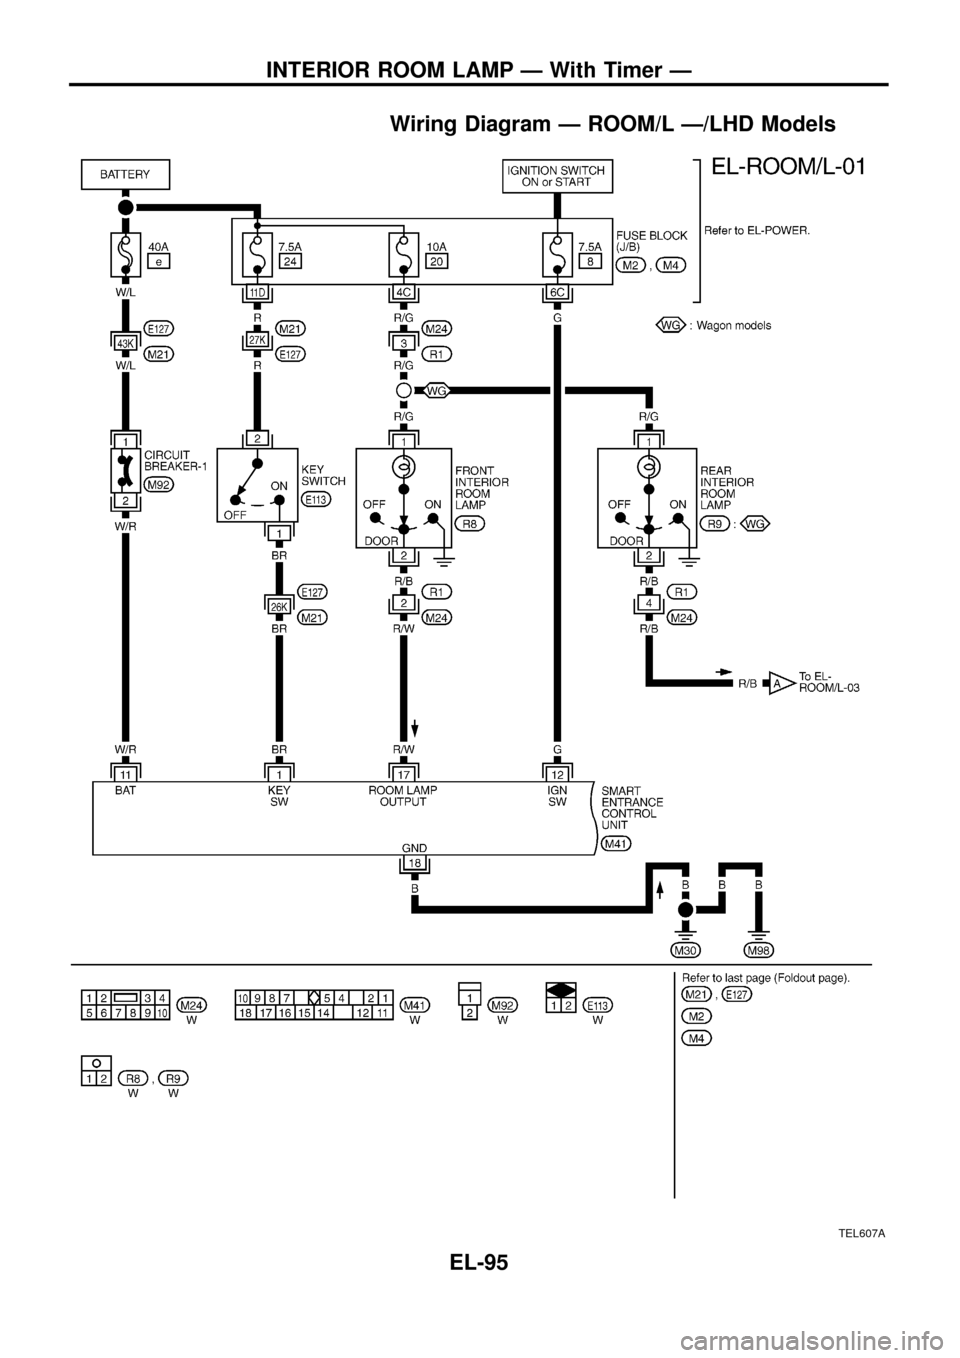 NISSAN PATROL 1998 Y61 / 5.G Electrical System Workshop Manual Wiring Diagram Ð ROOM/L Ð/LHD Models
TEL607A
INTERIOR ROOM LAMP Ð With Timer Ð
EL-95 